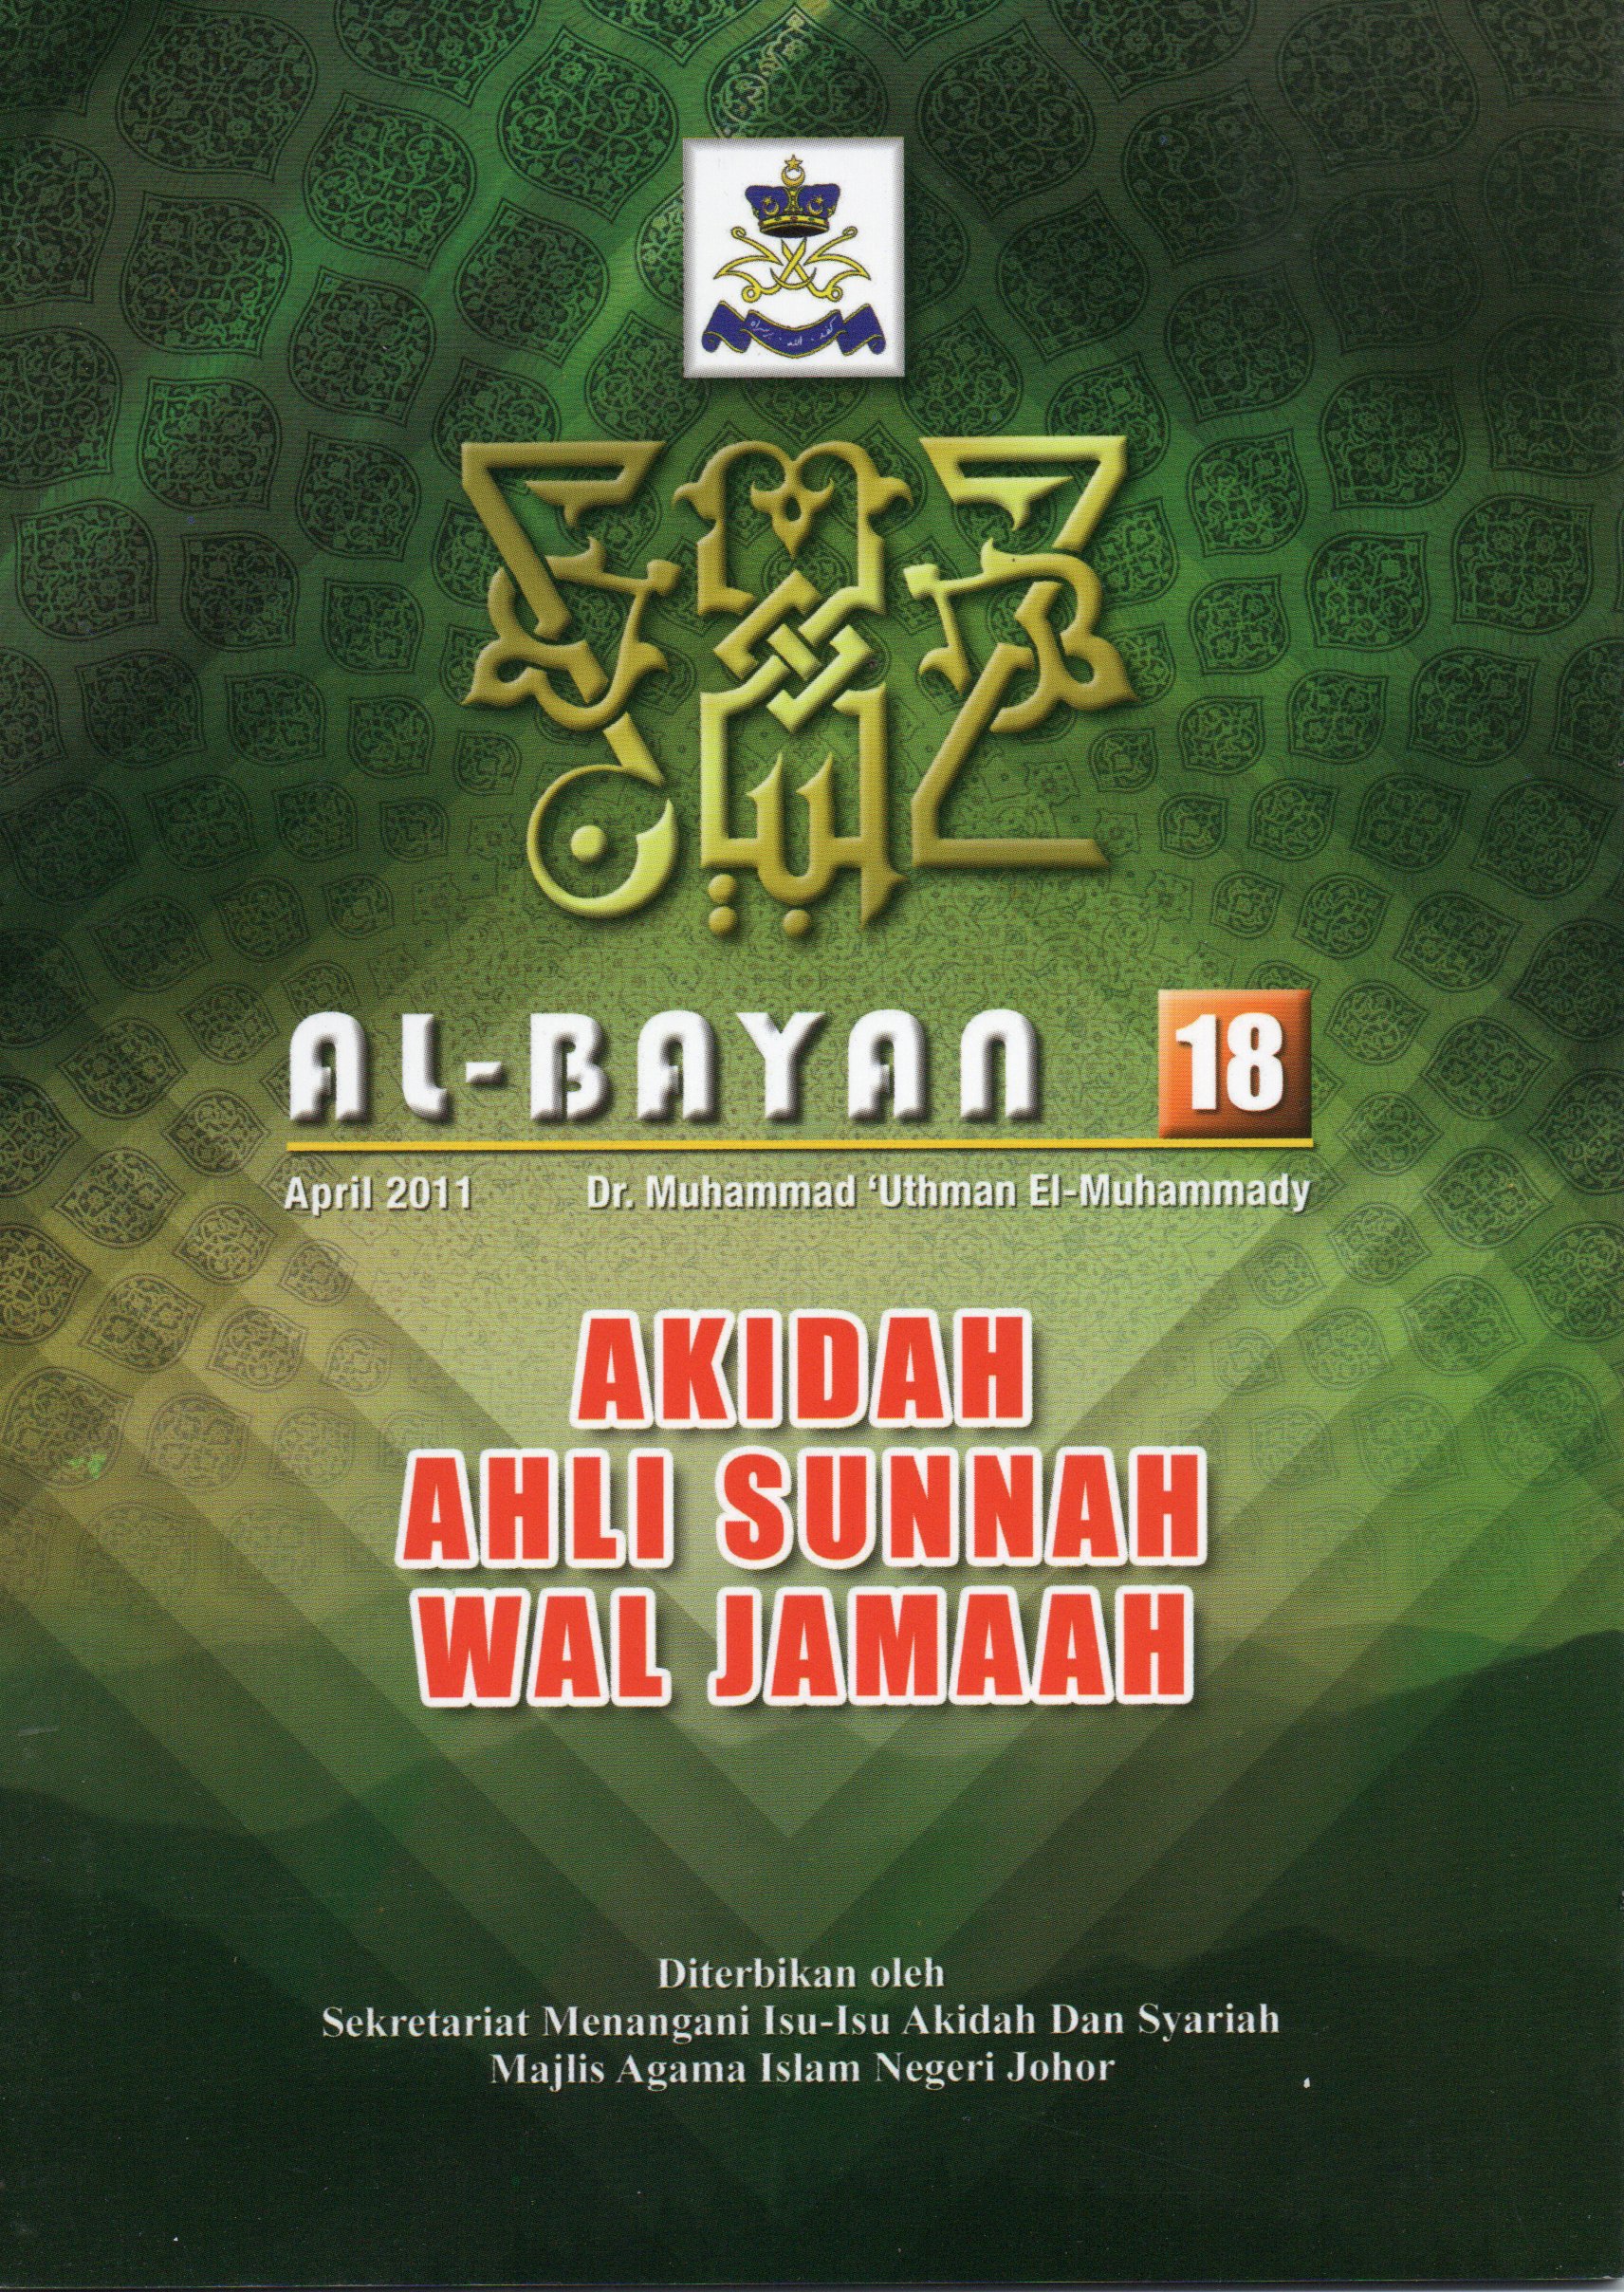 Al-BAyan 18: akidah ahli sunnah wal jamaah